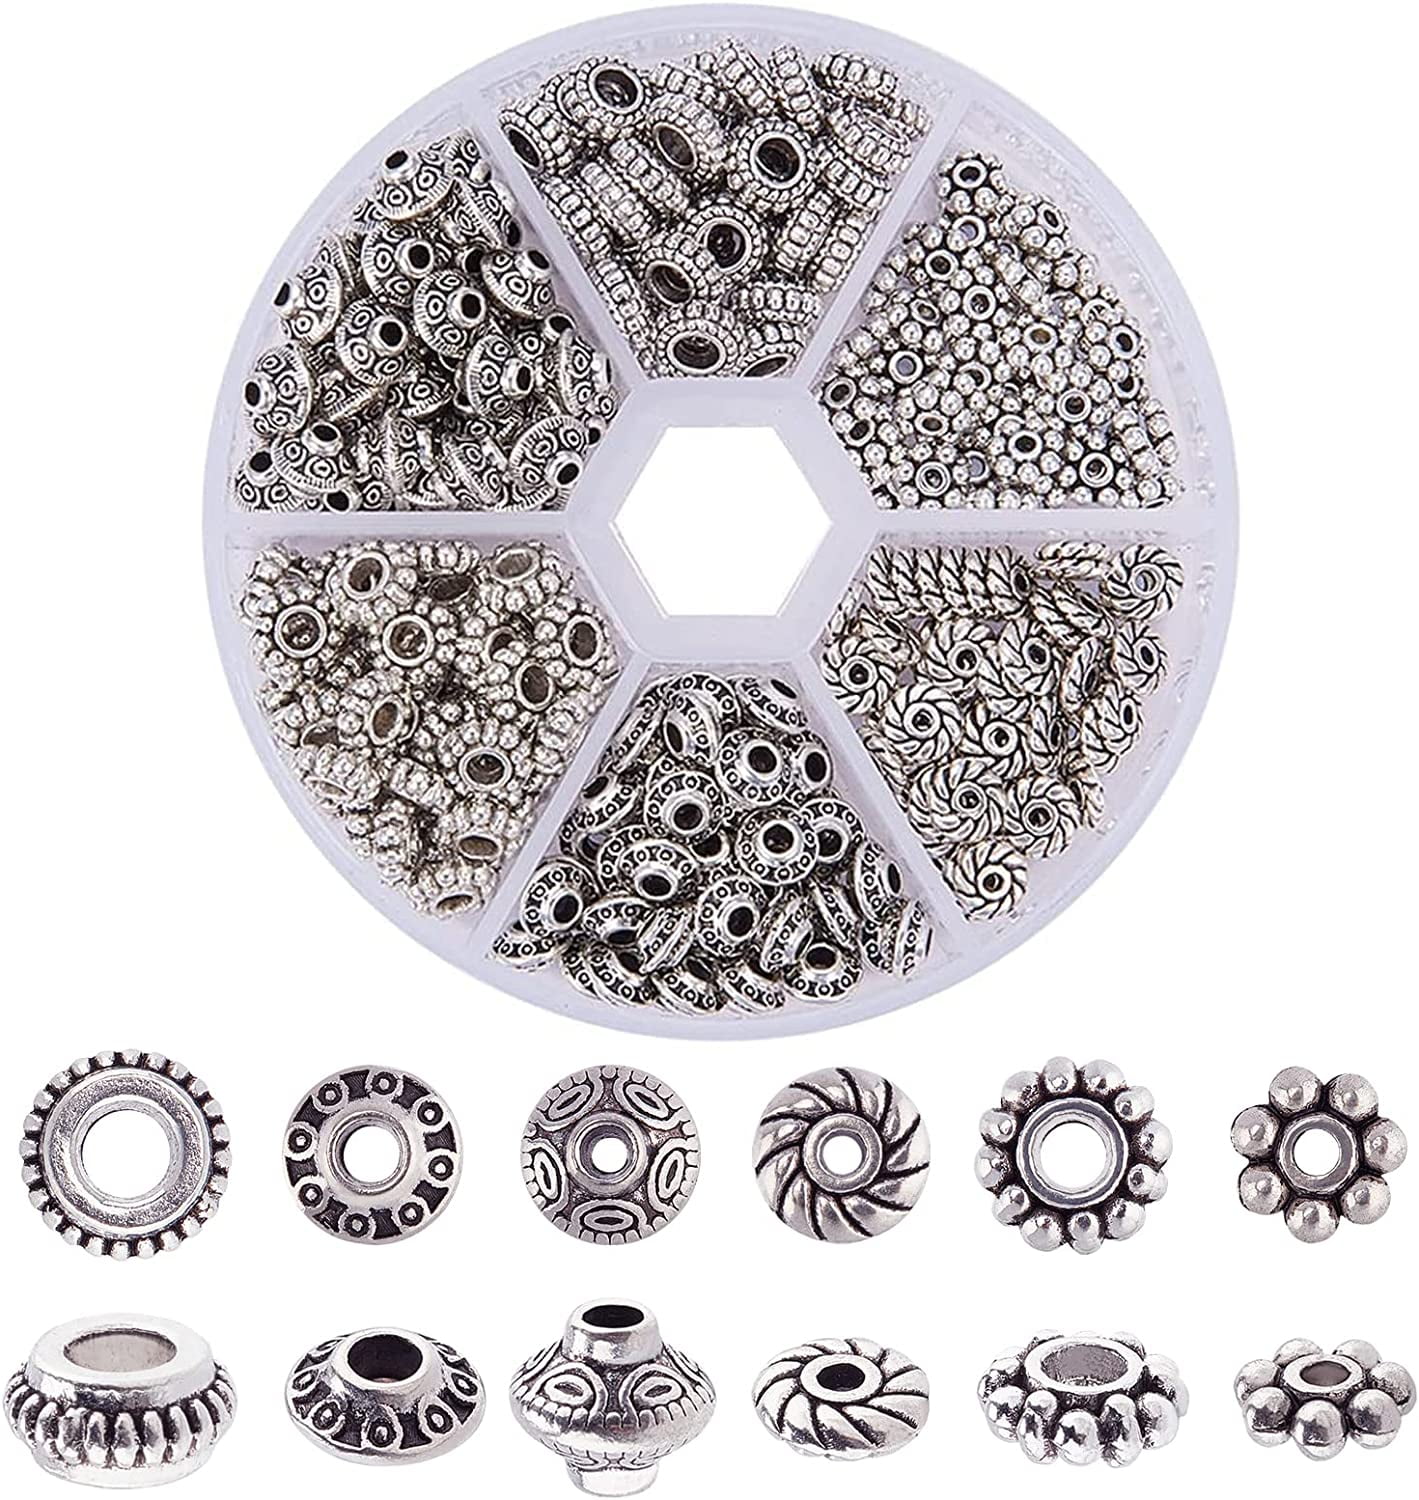 125 Pieces Tibetan Silver Metal Spacer Beads, Mixed Flower Retro Style Metal  Flower Bead Caps (2-cc)